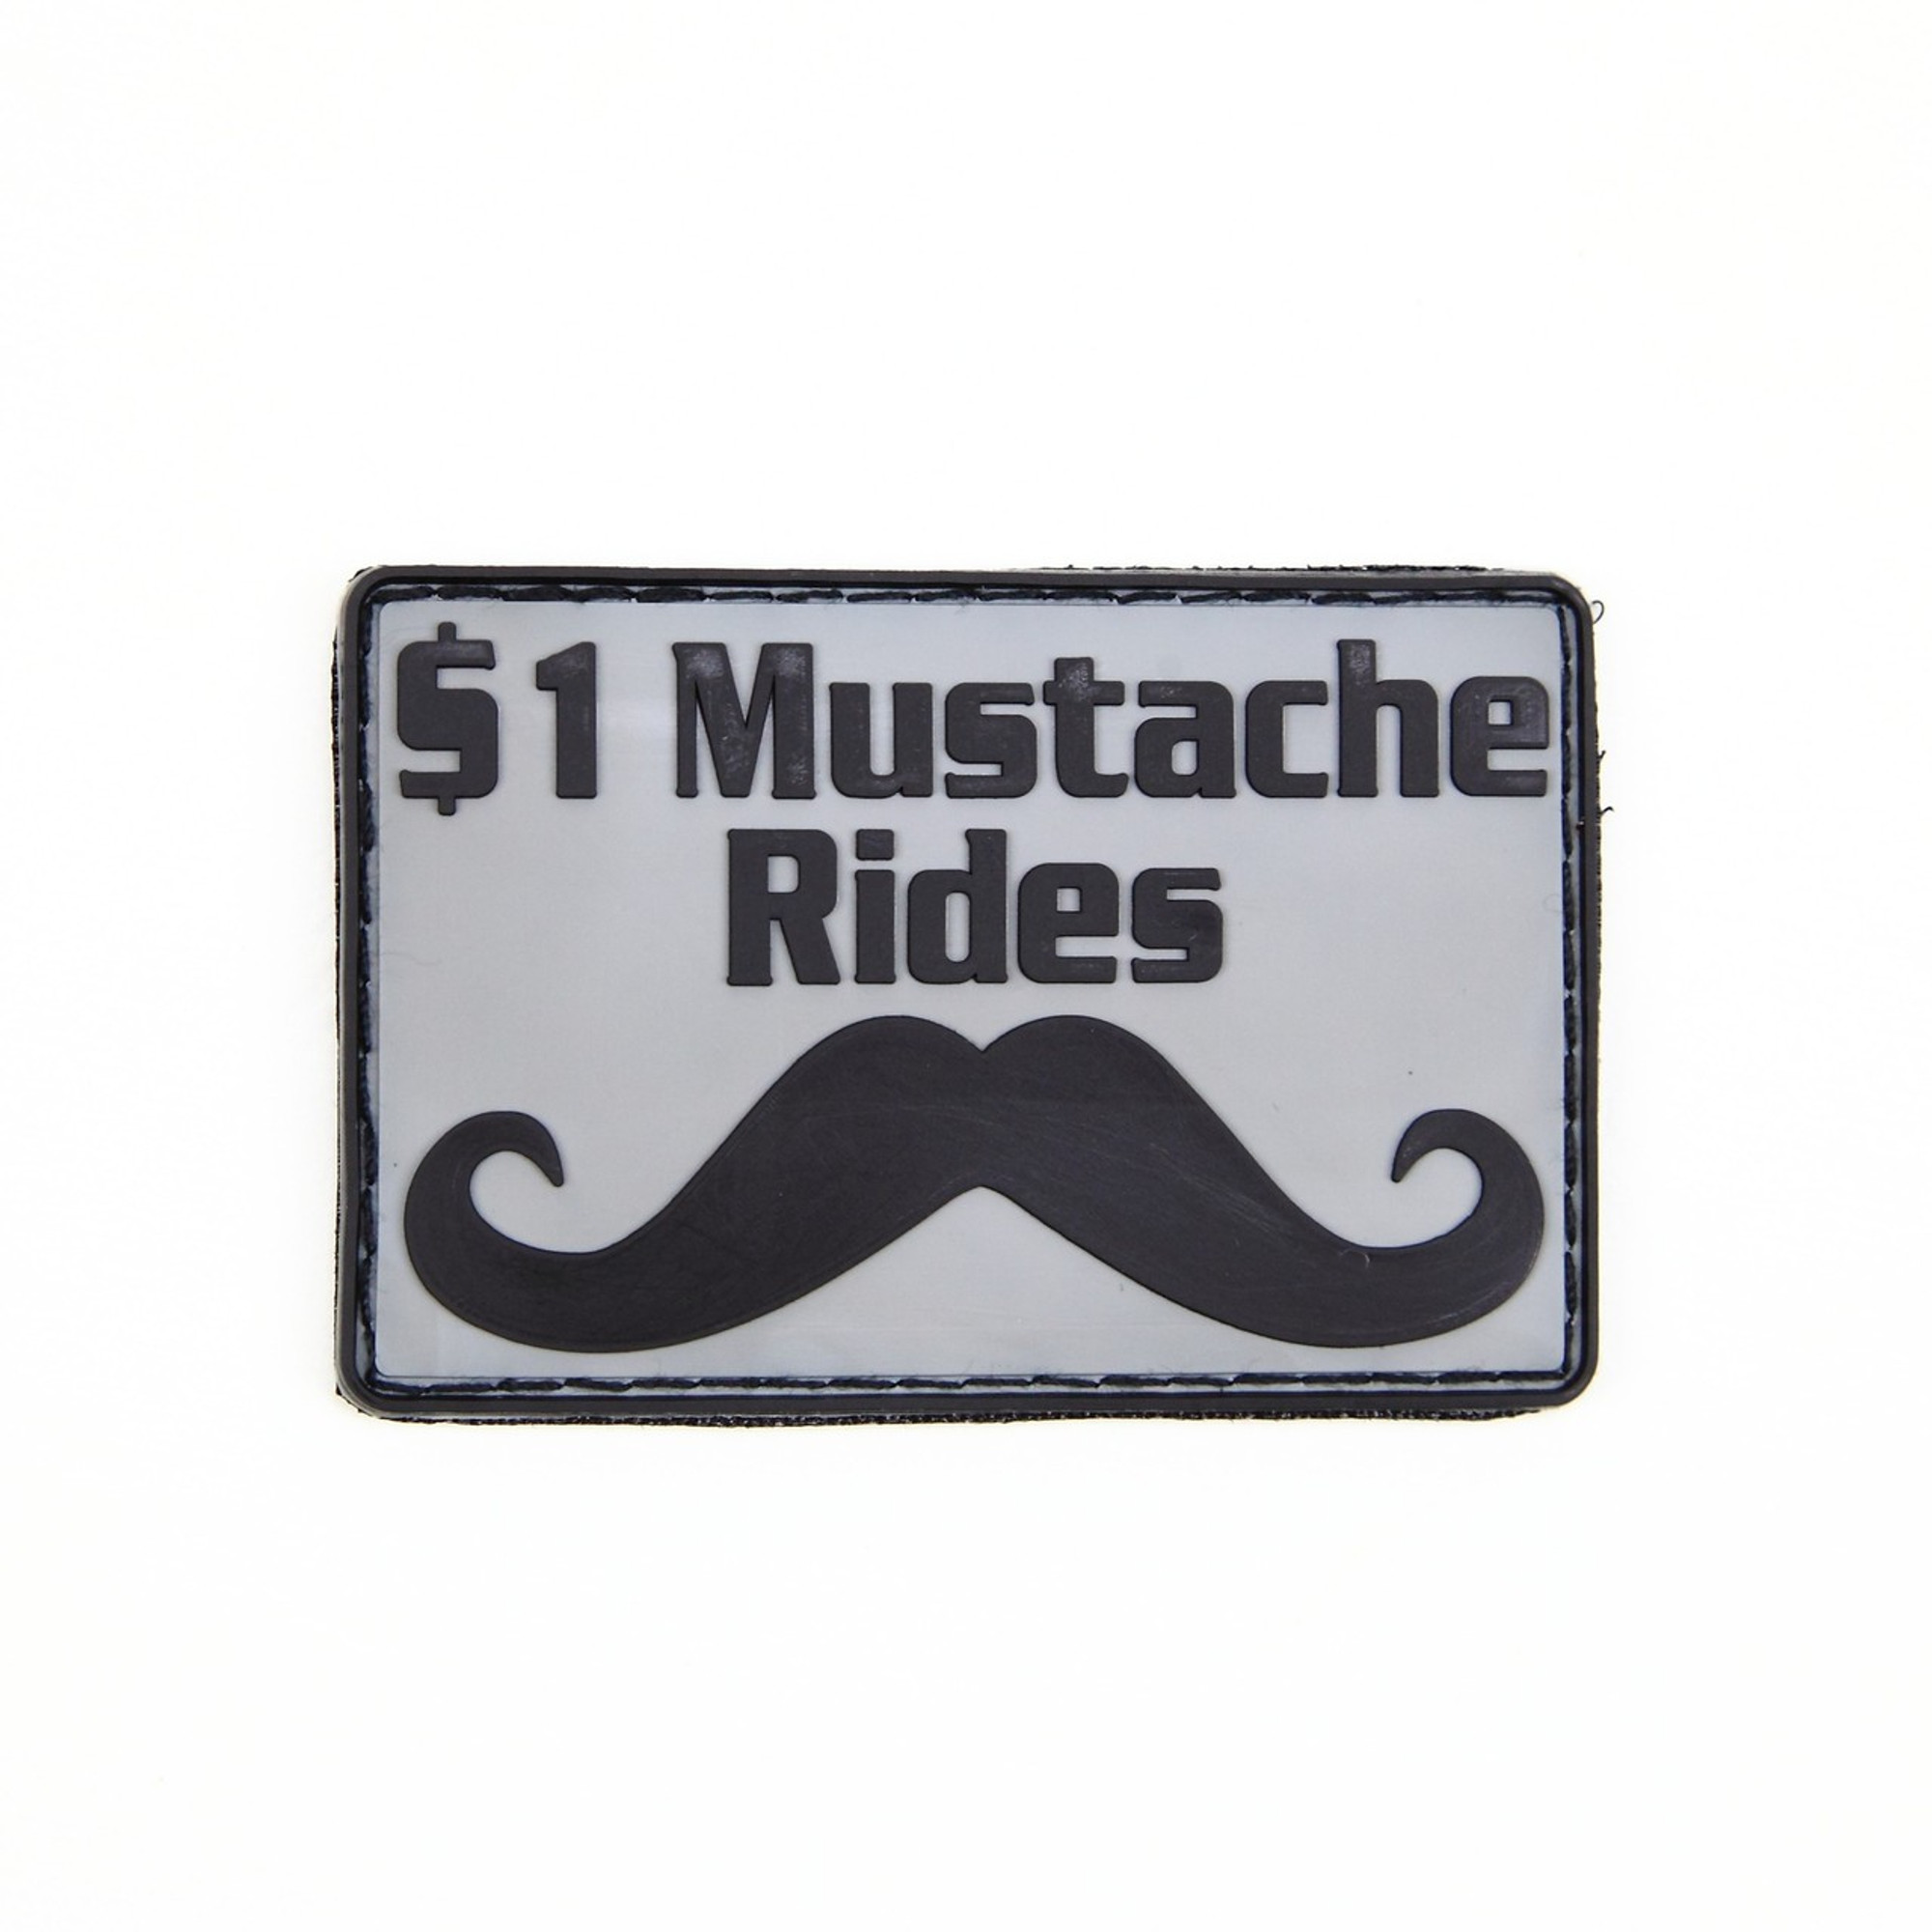 $1 Mustache Rides - Grey - Morale Patch